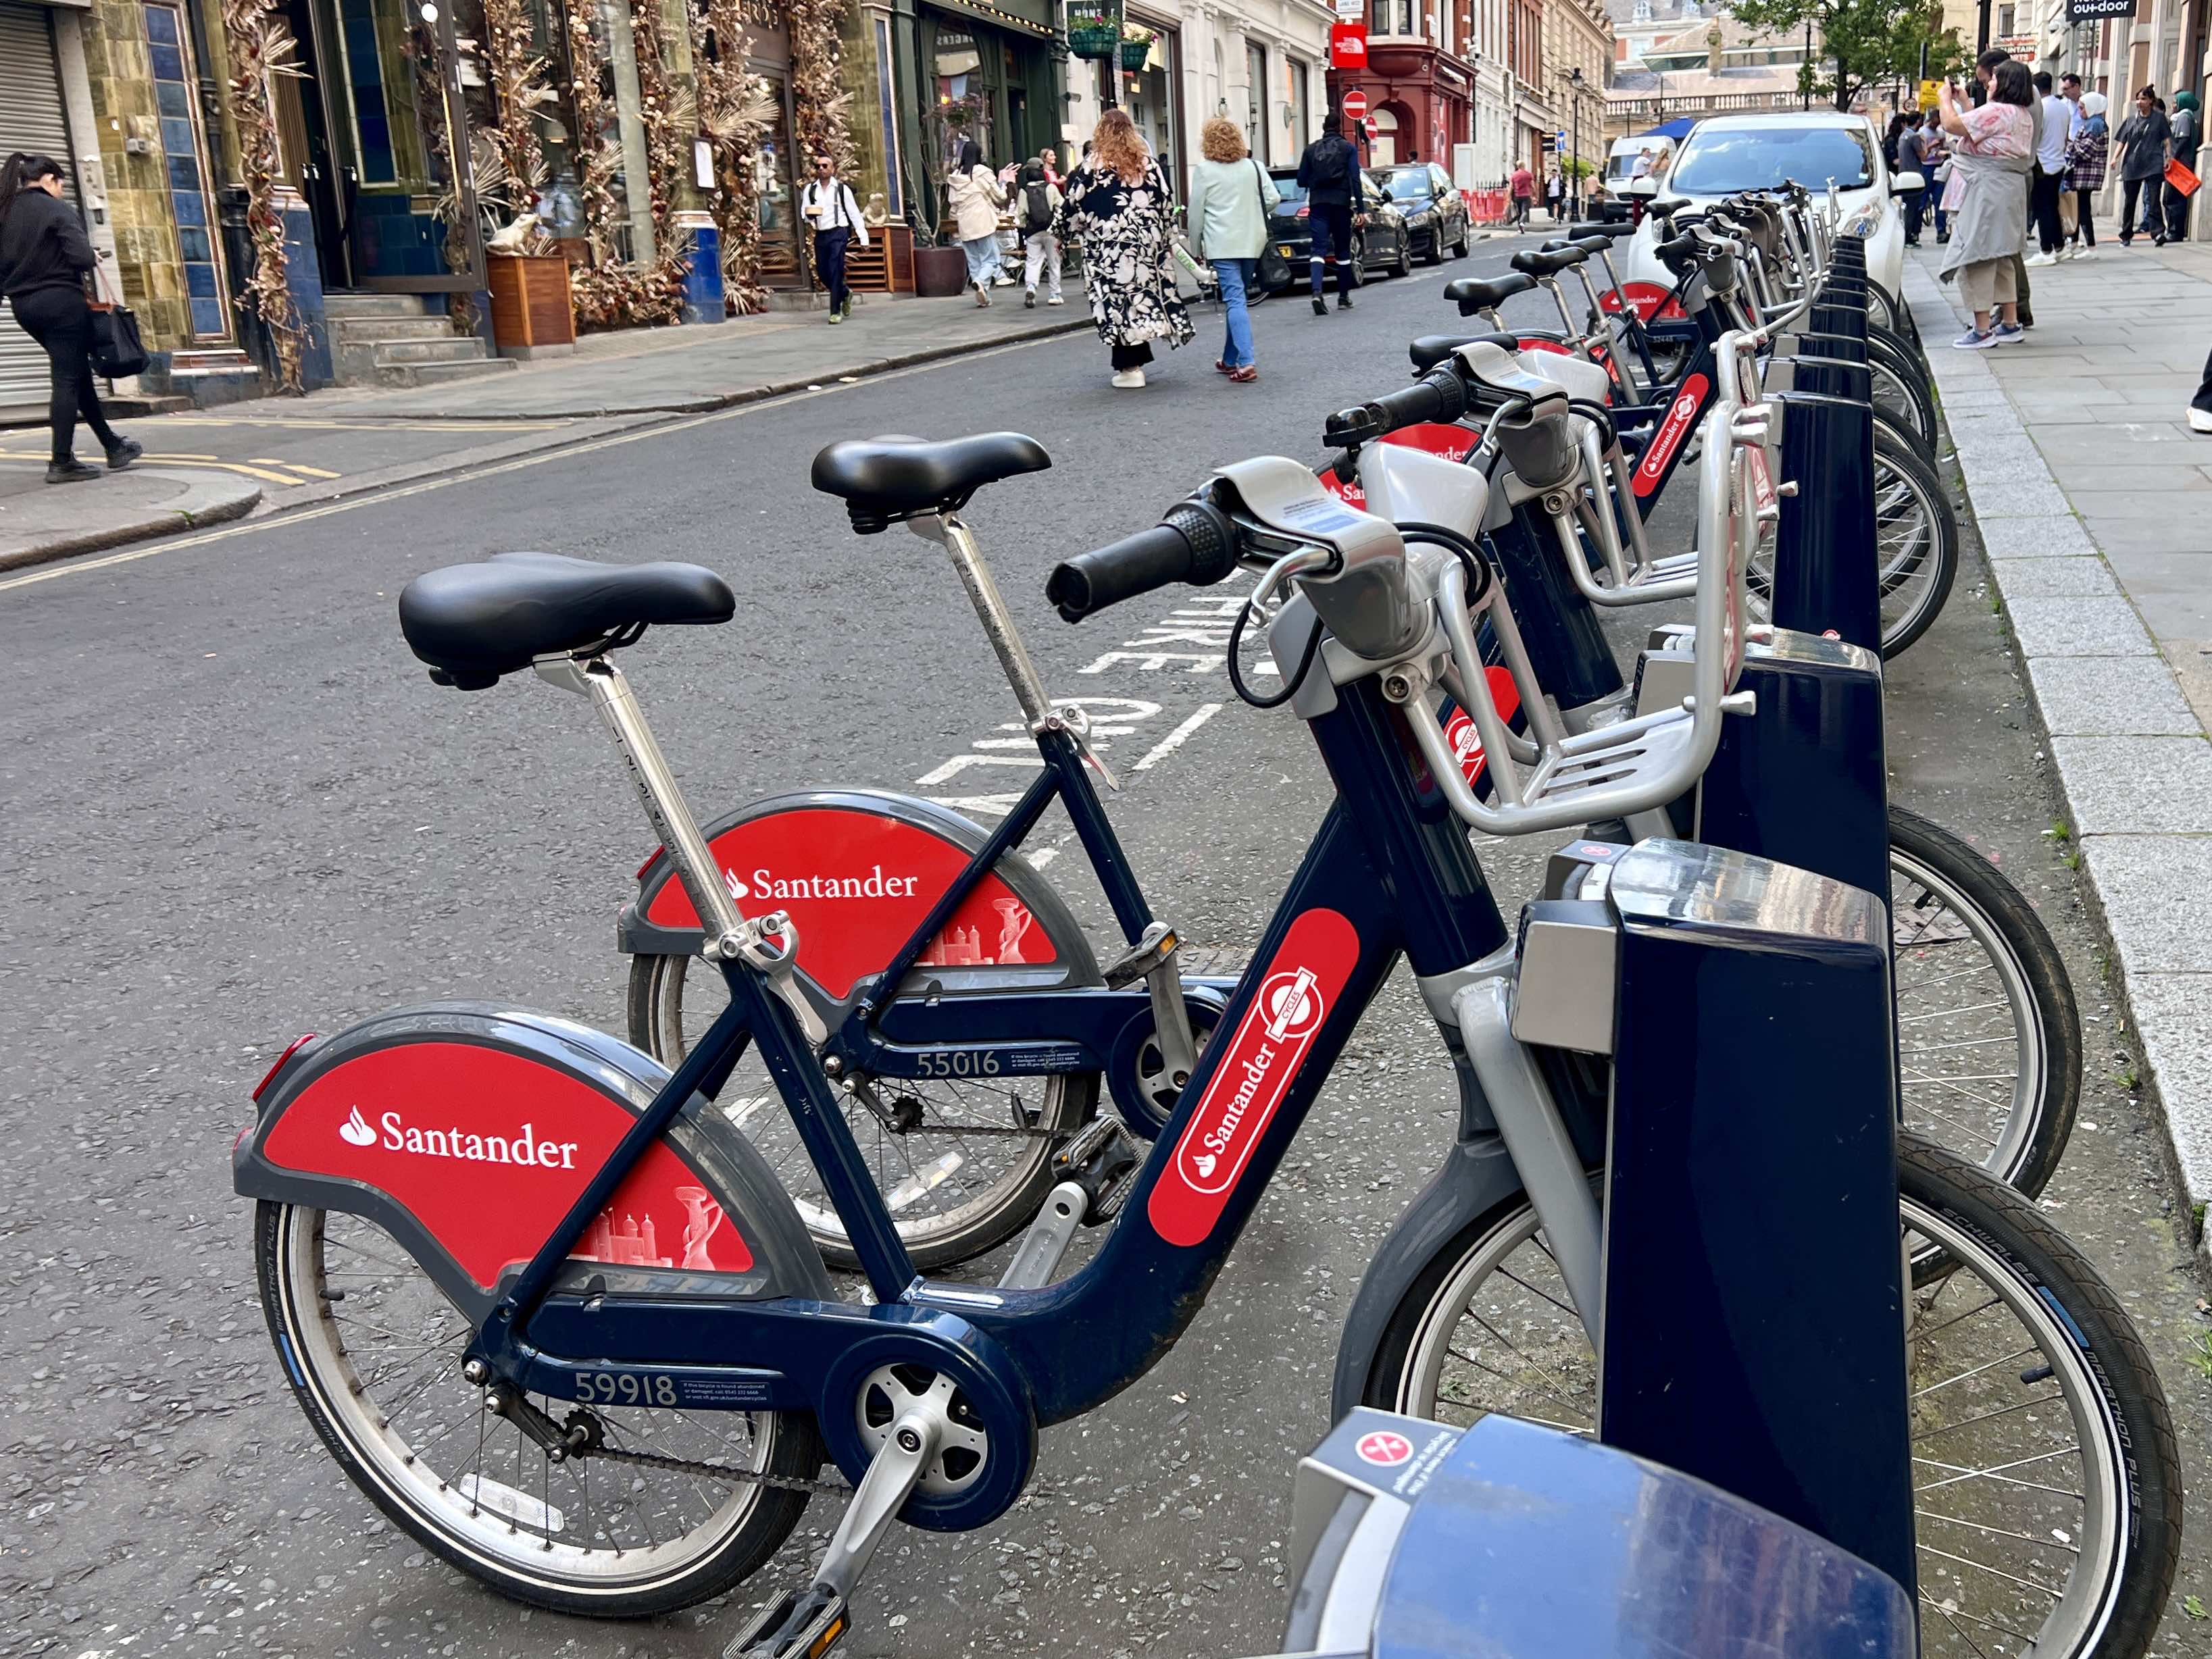 Santander Cycle - aluguel de bicicletas em Londres